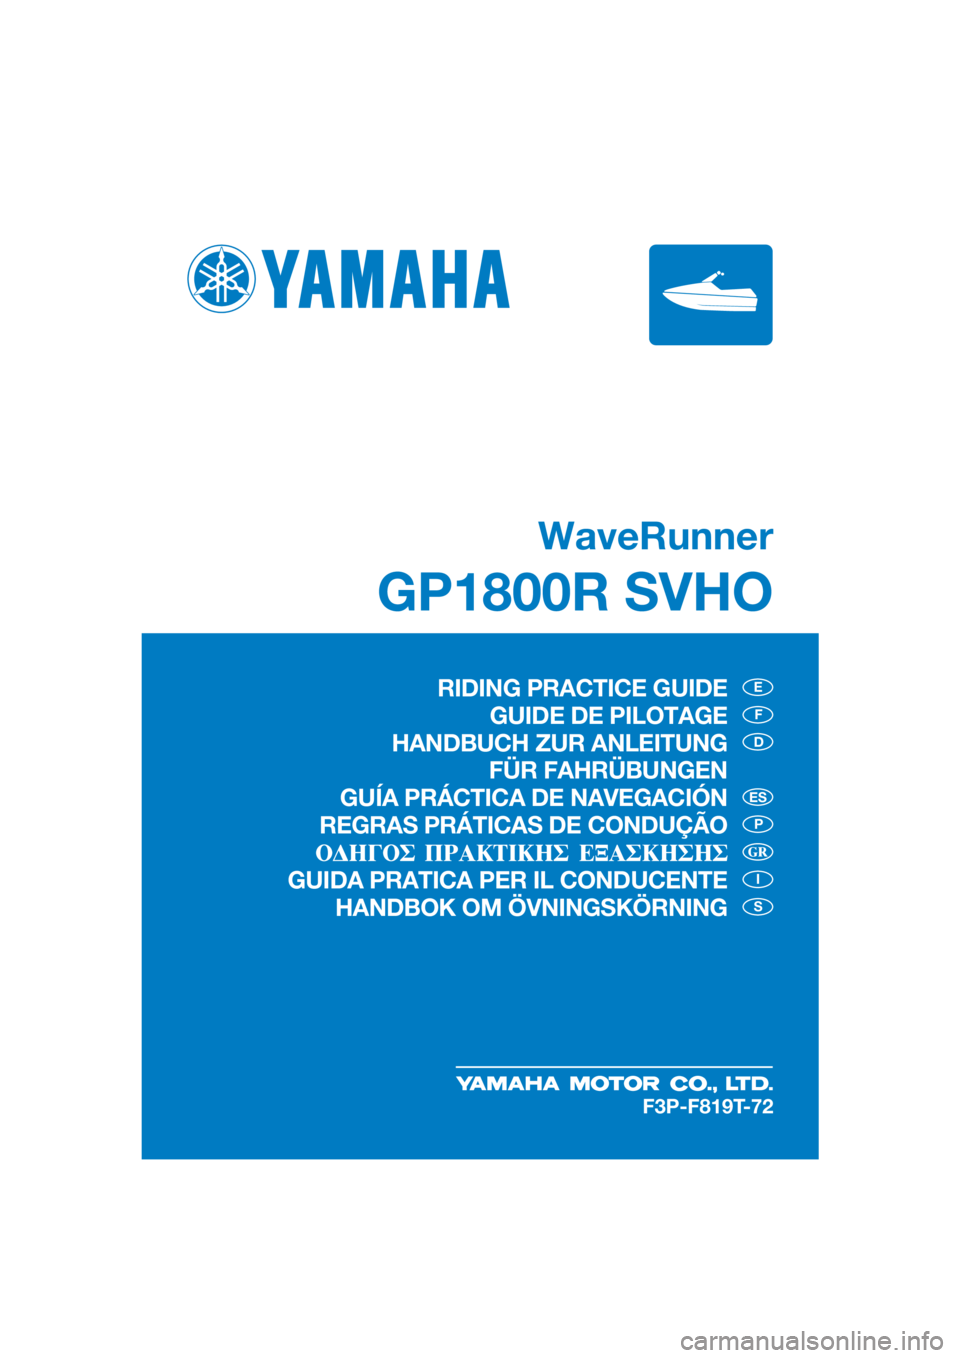 YAMAHA GP1800R SVHO 2020  Manuale de Empleo (in Spanish) 